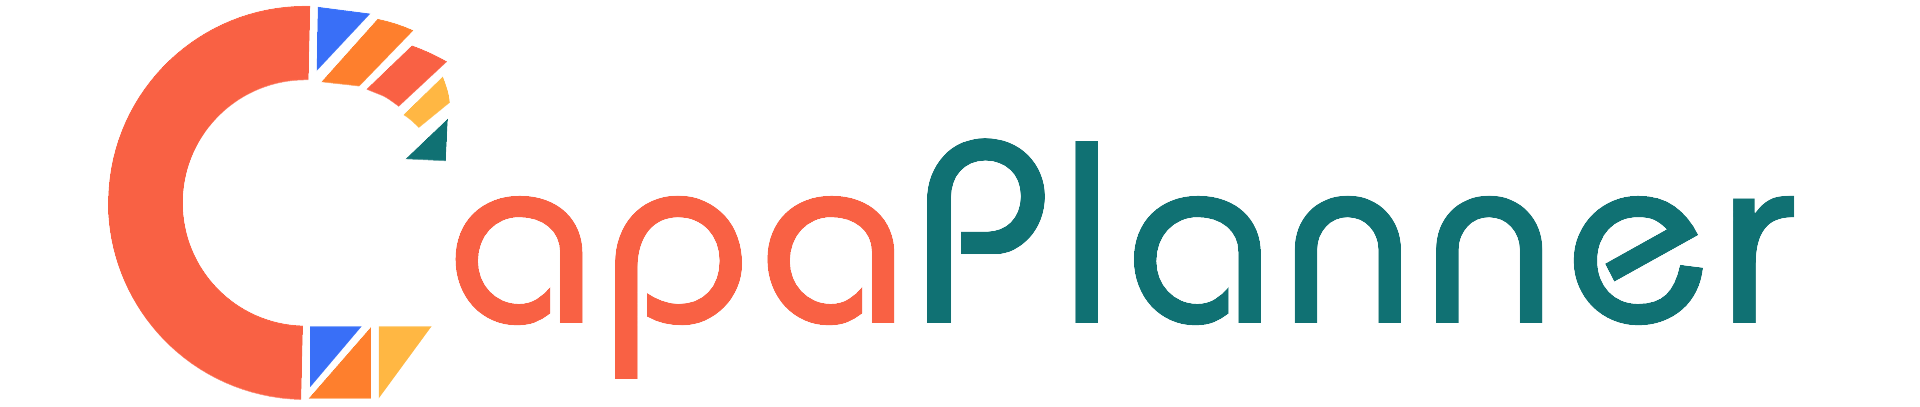 CapaPLanner logo